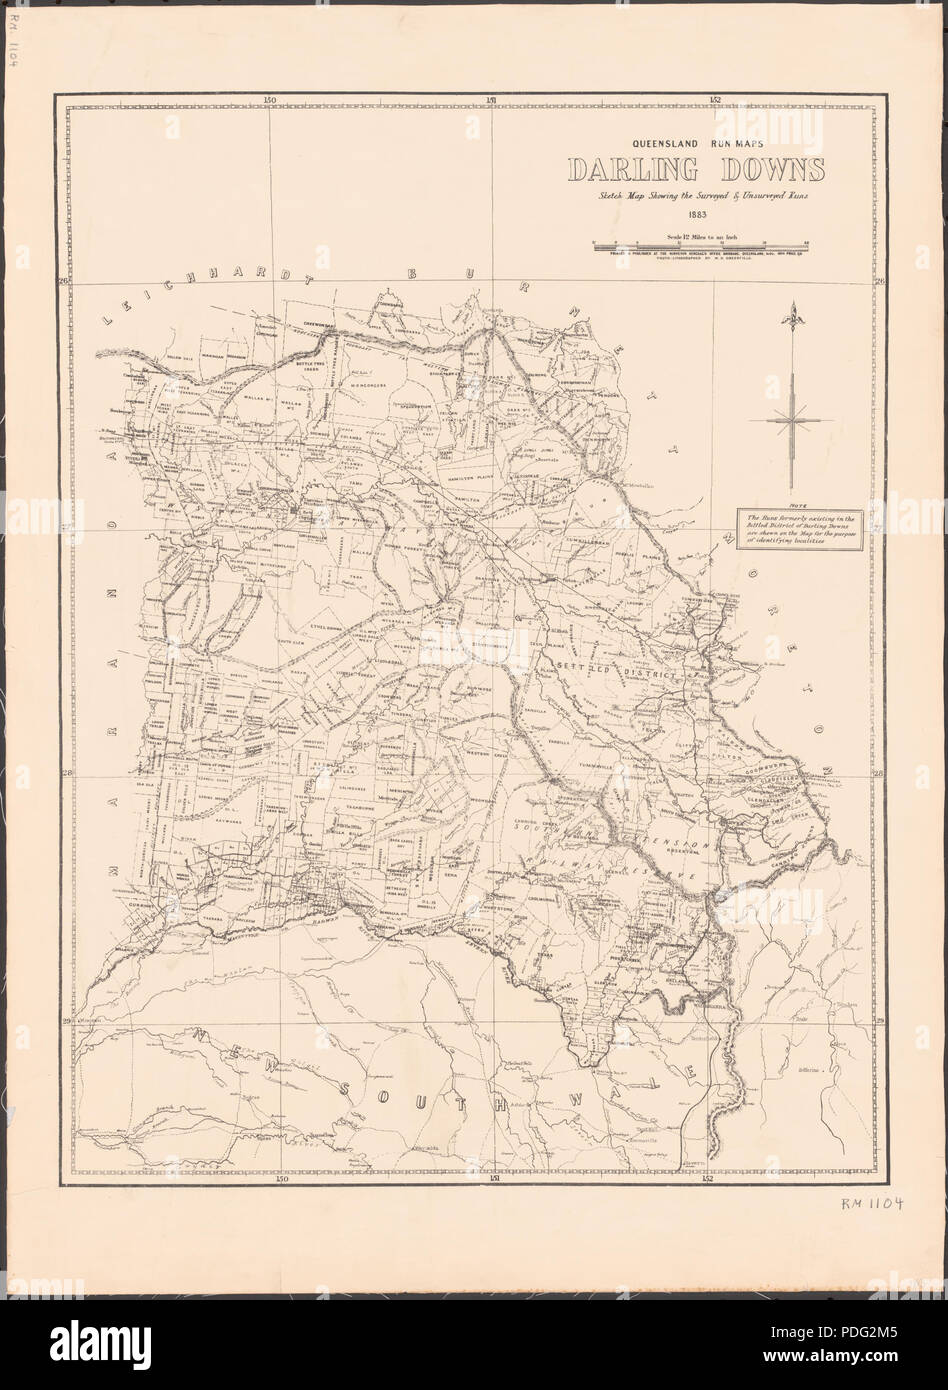 38 Darling Downs sketch map showing the surveyed &amp; unsurveyed runs, 1883 Stock Photo